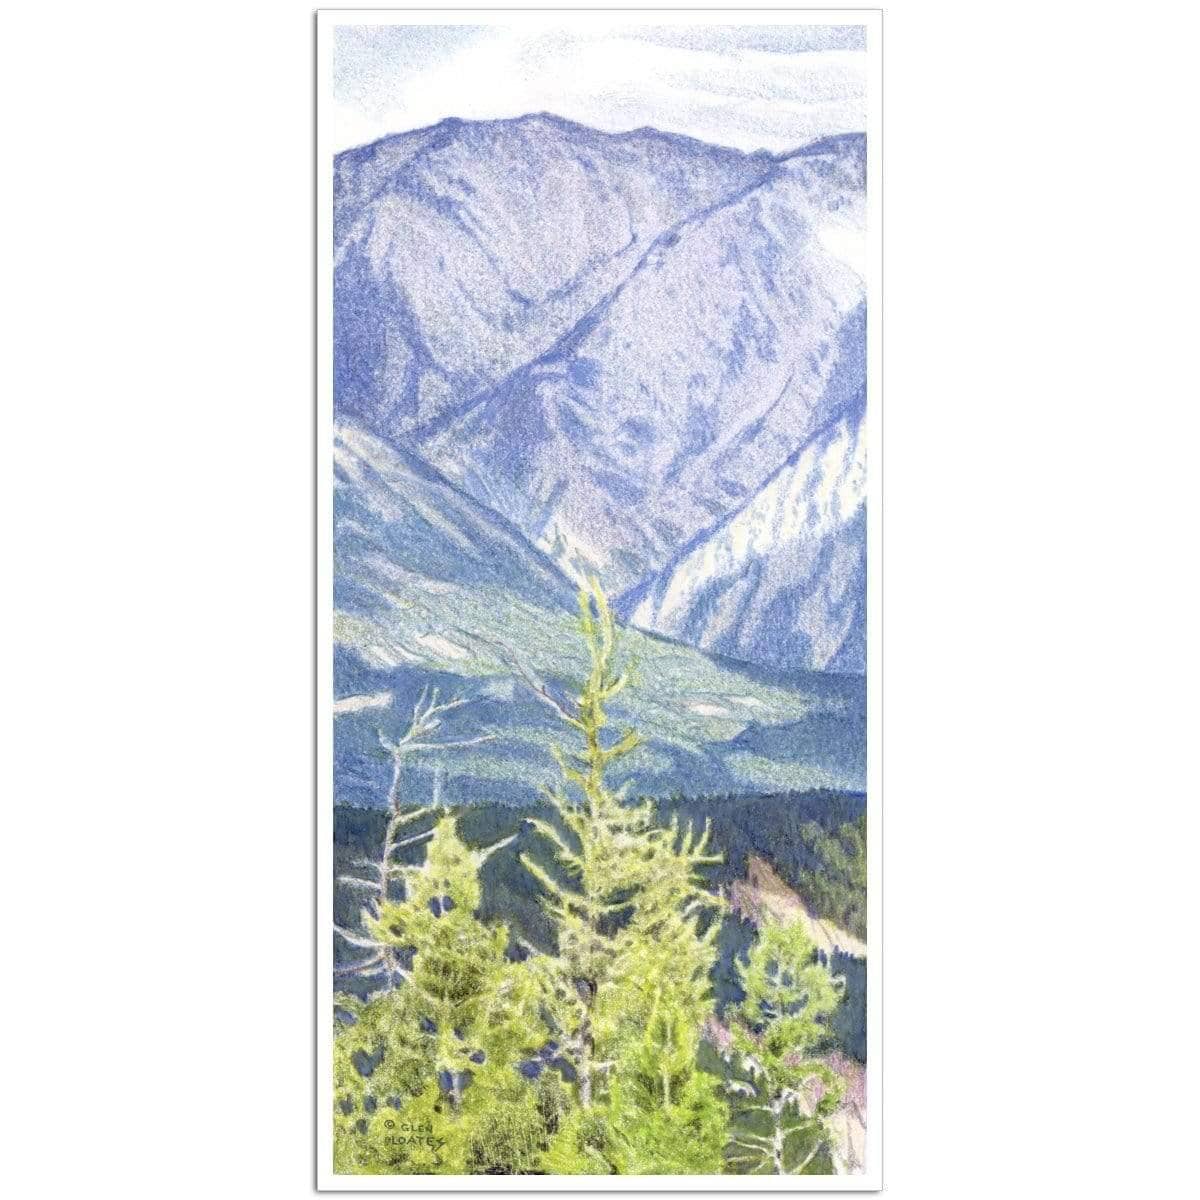 Fairholme Range Banff - Art Print | Artwork by Glen Loates